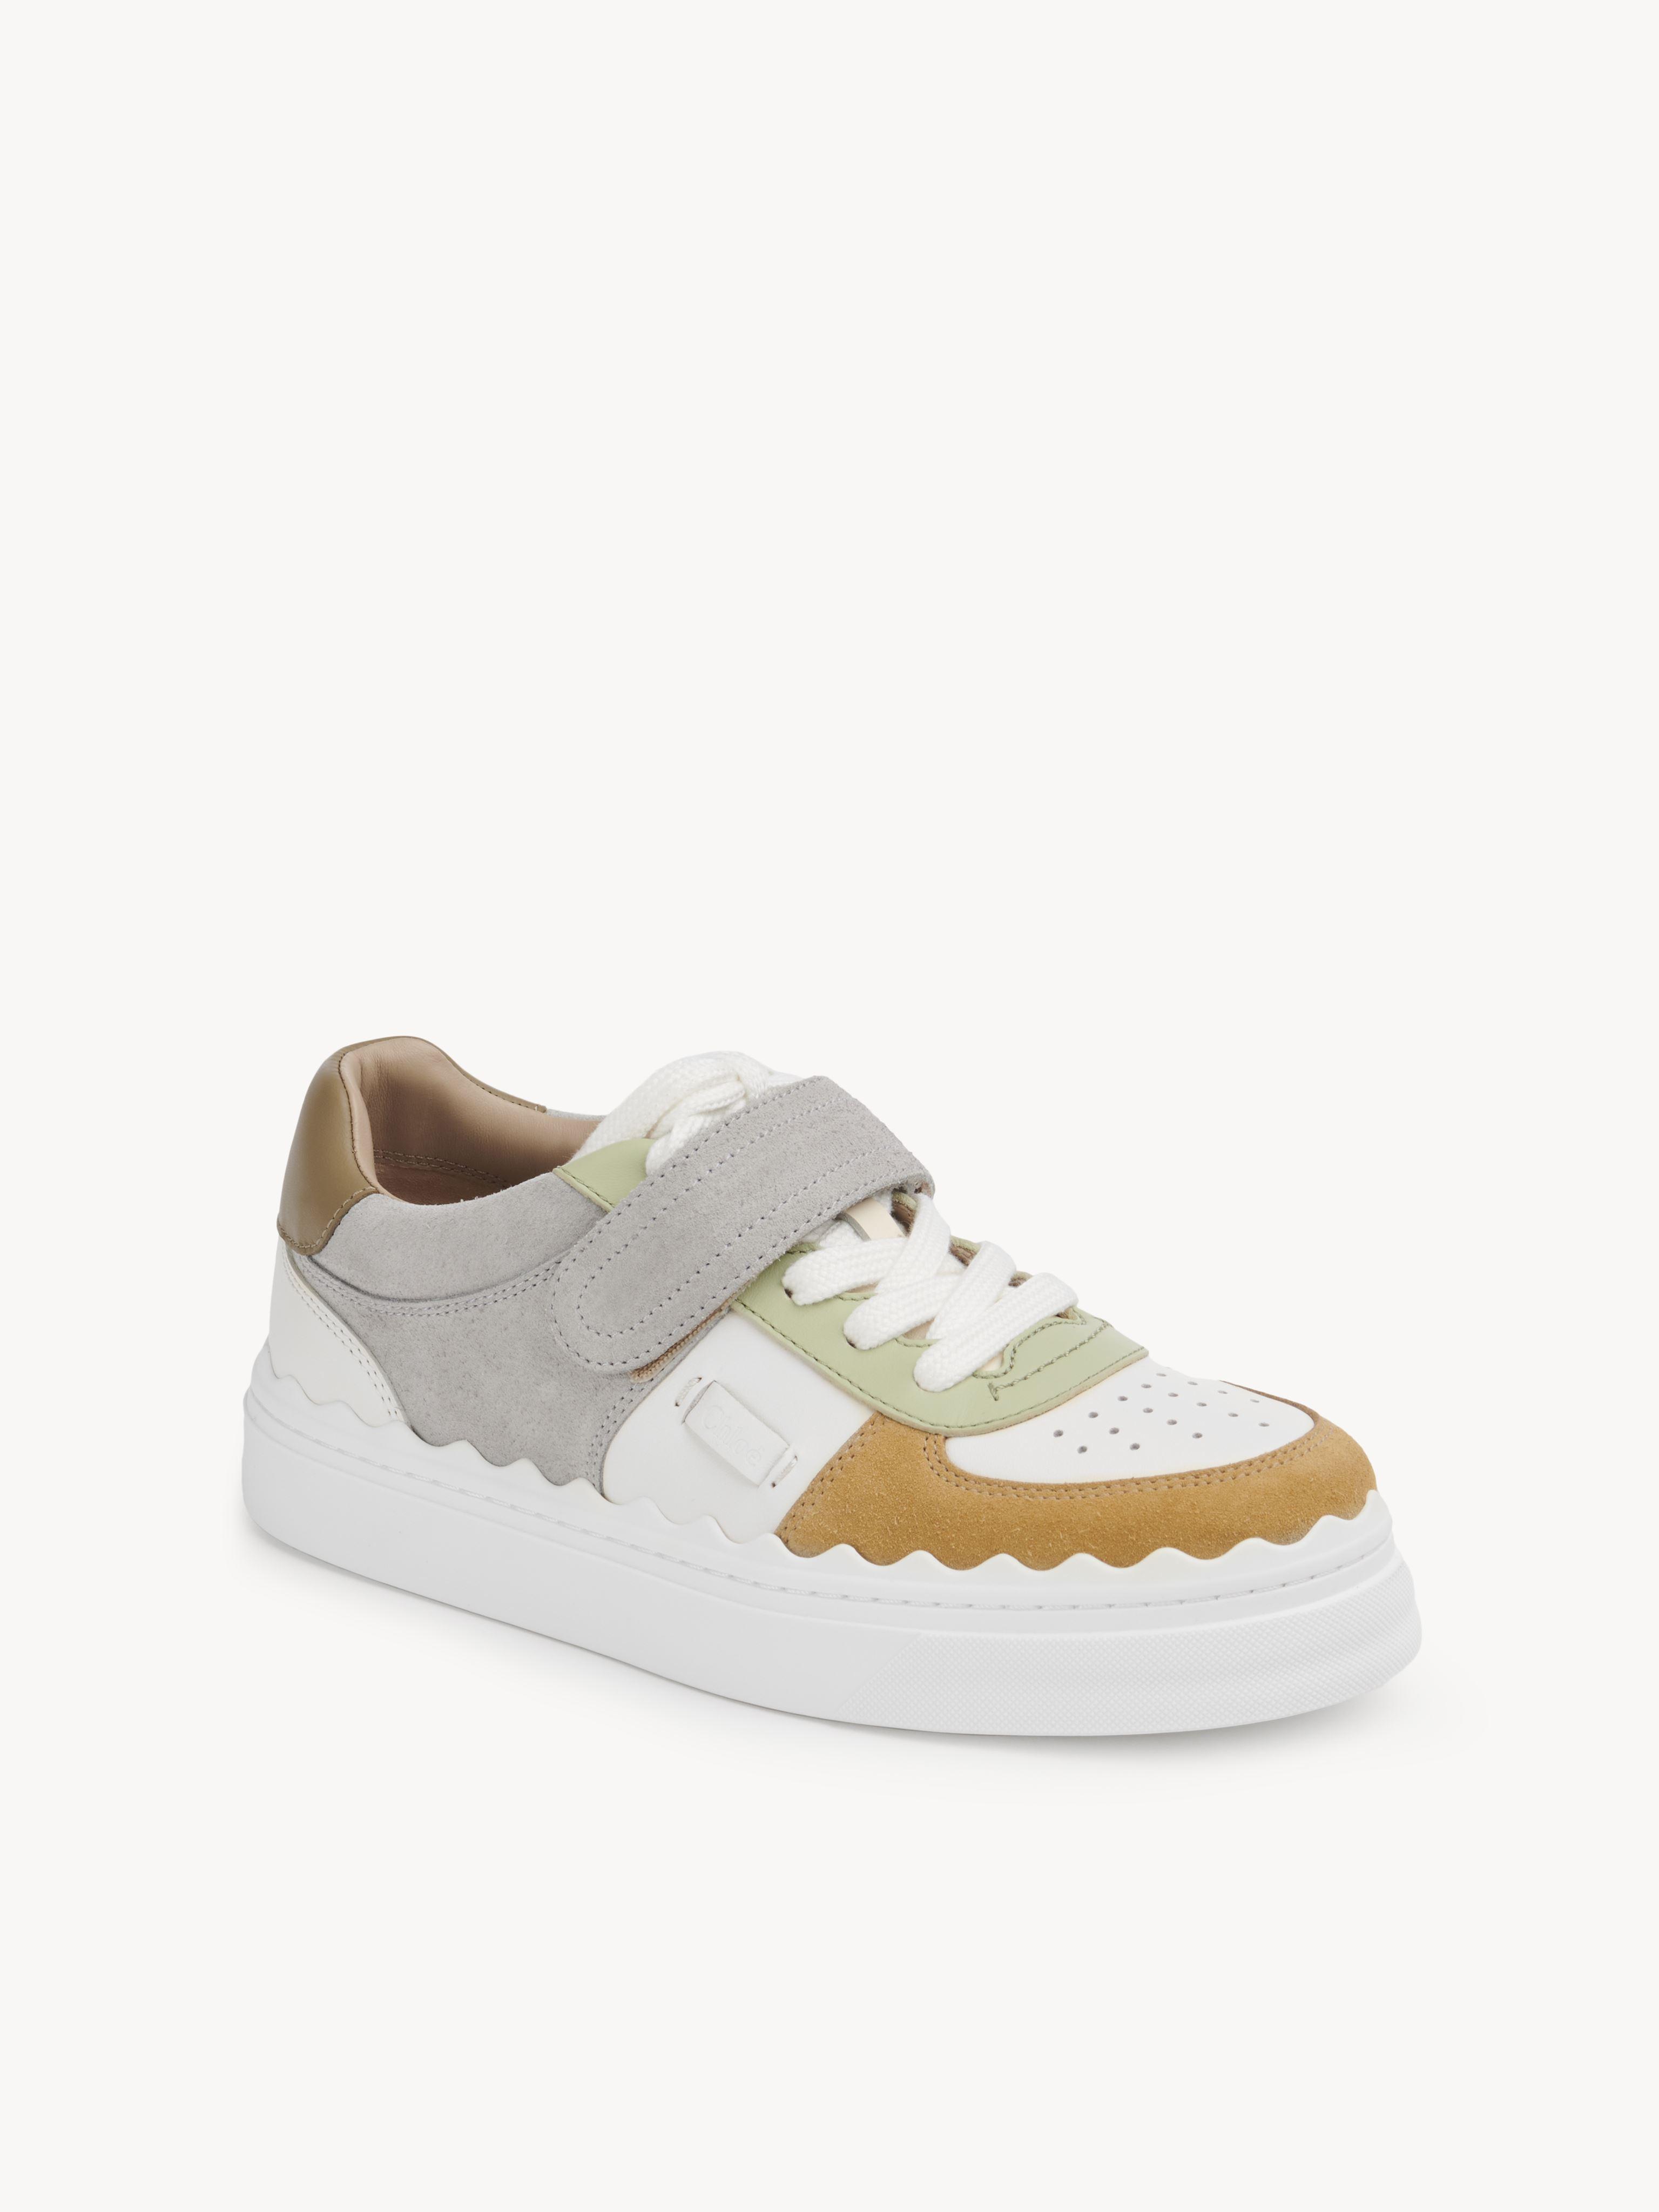 Chloé Lauren Sneaker With Strap in White | Lyst